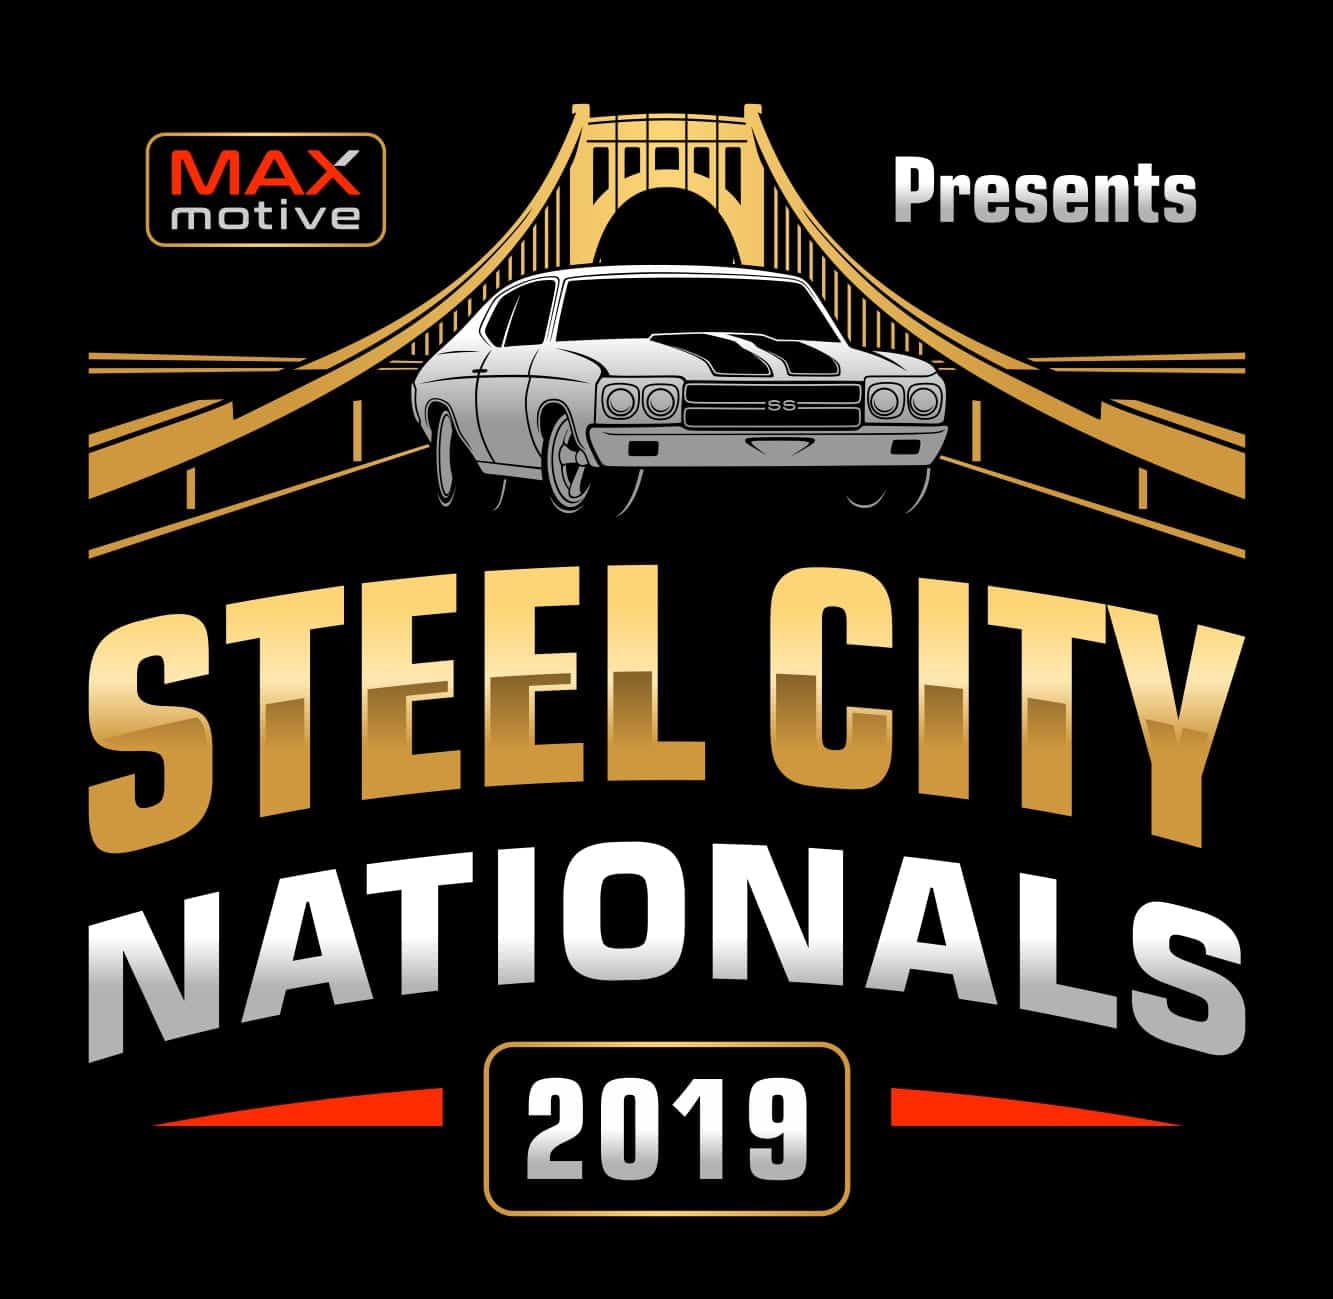 MAXmotive Announces Steel City Nationals 2019